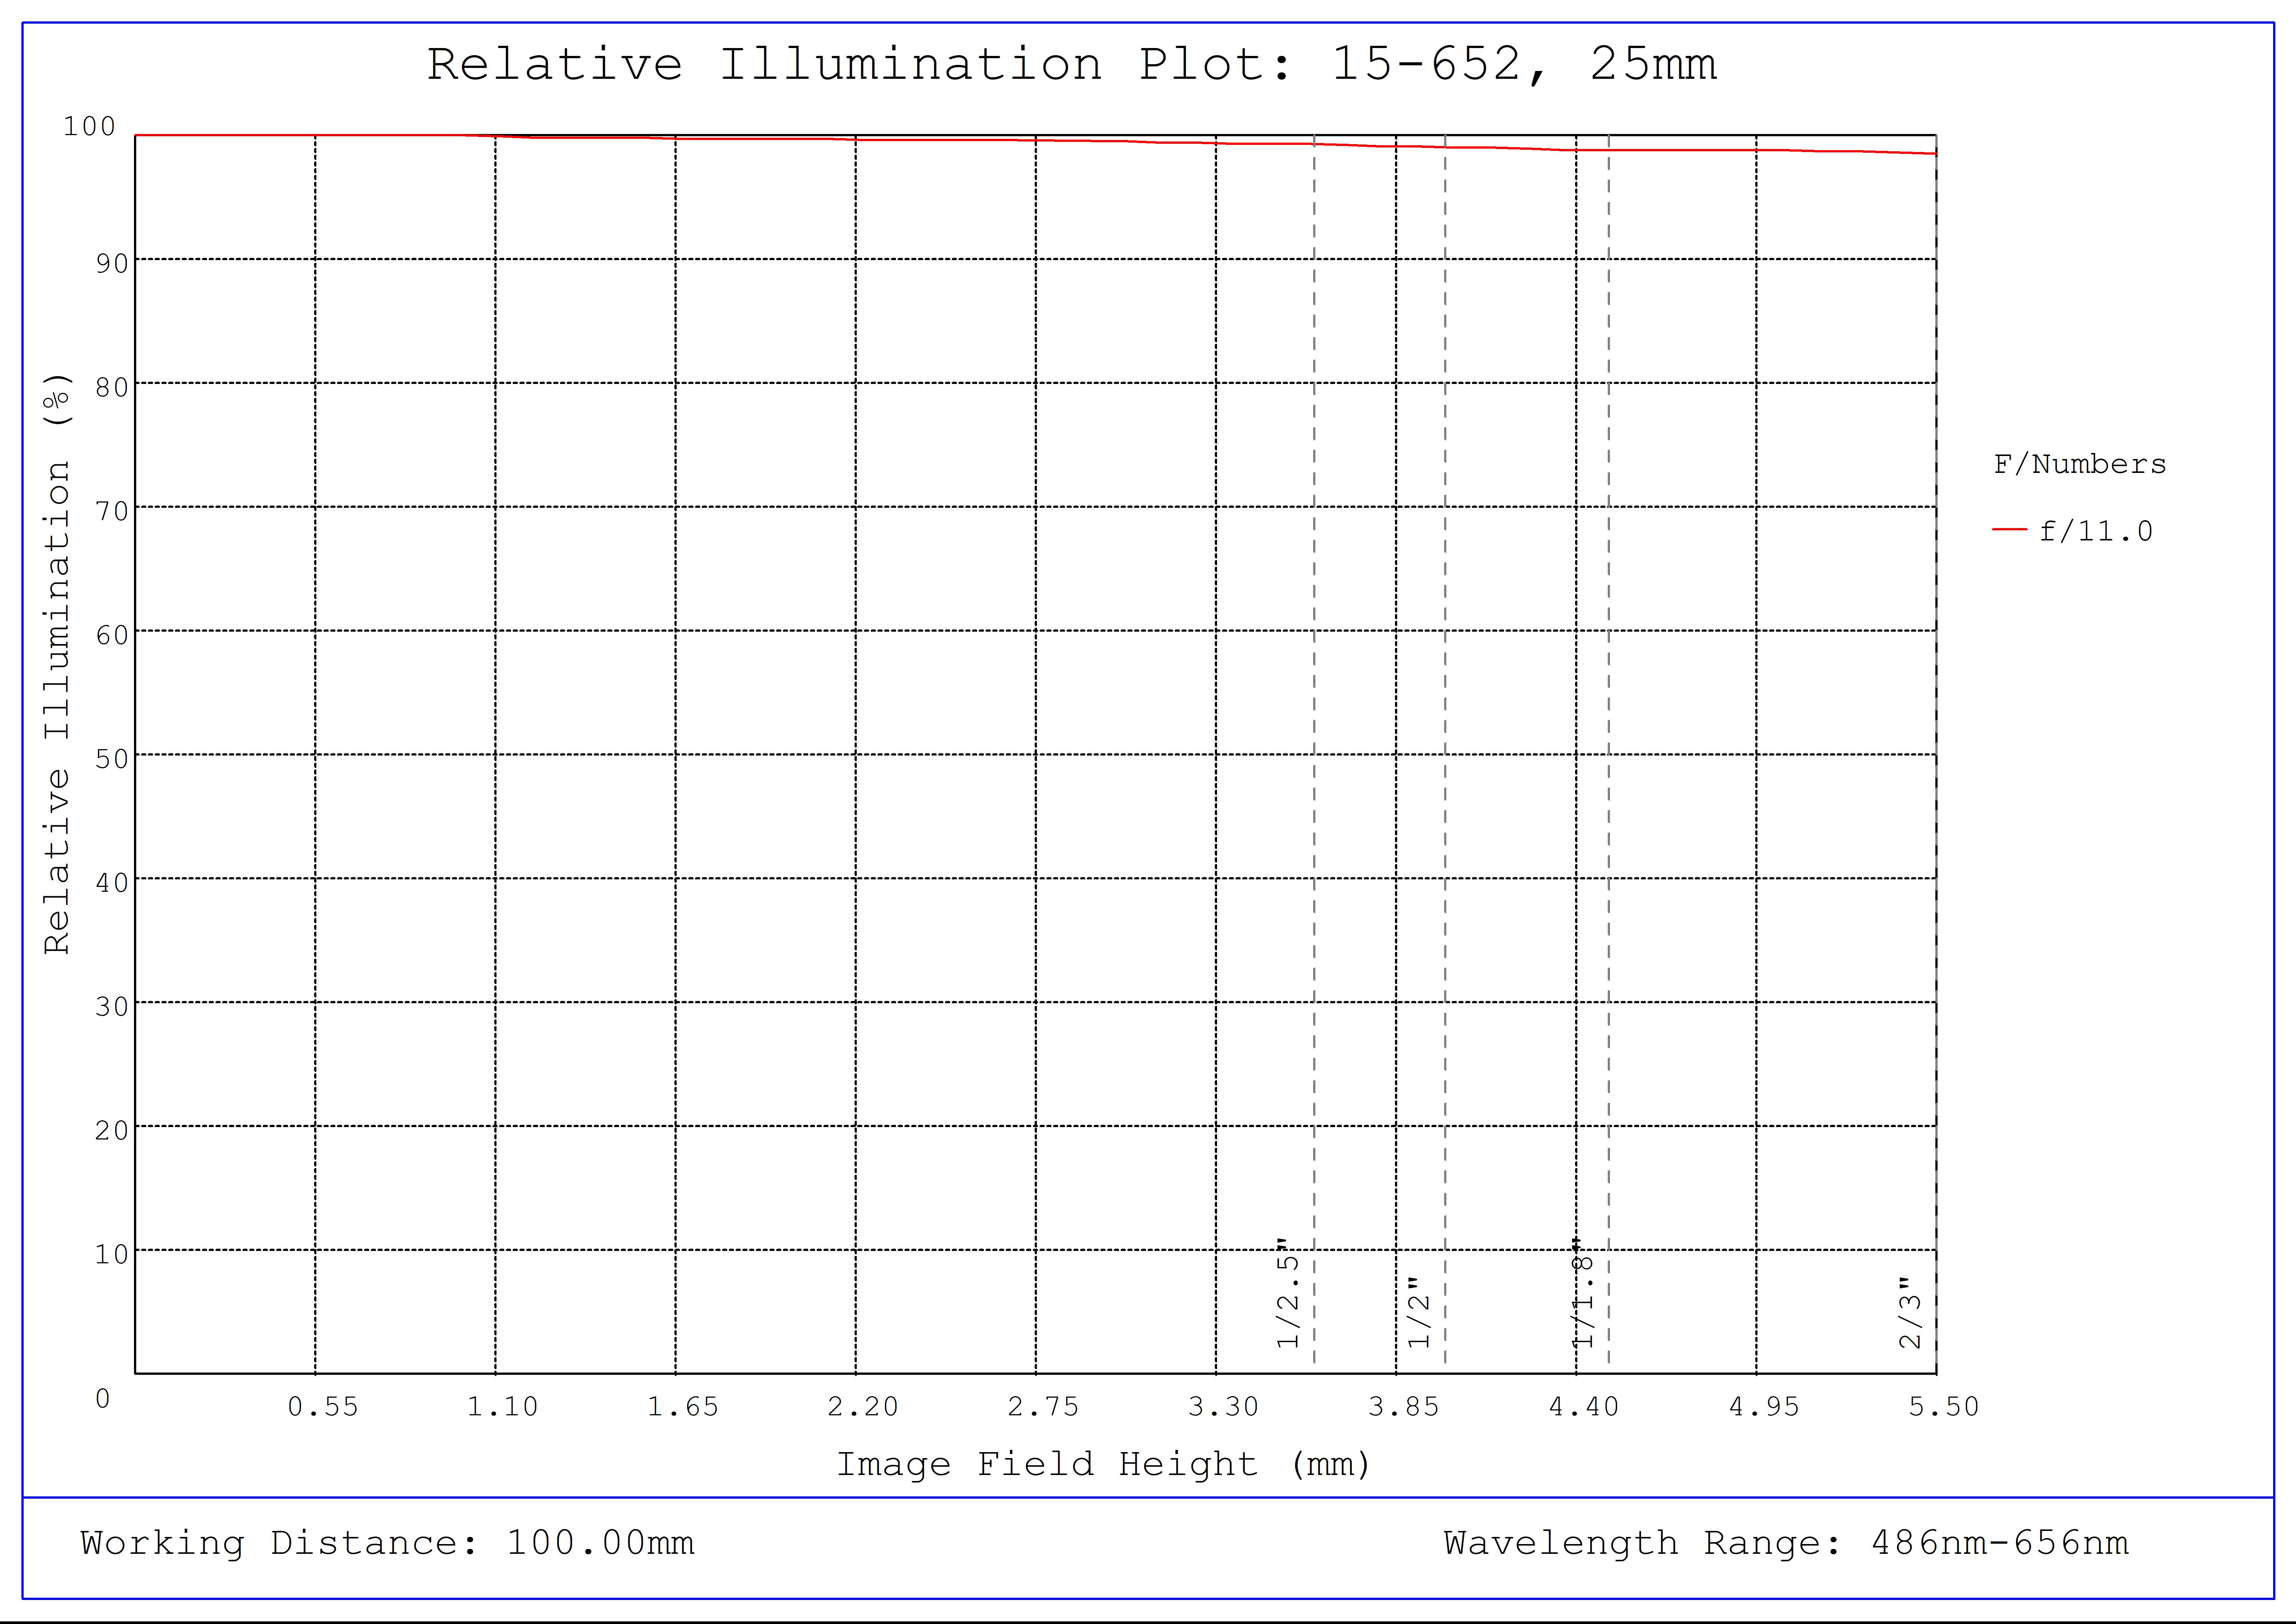 #15-652, 25mm, f/11 Cw Series Fixed Focal Length Lens, Relative Illumination Plot